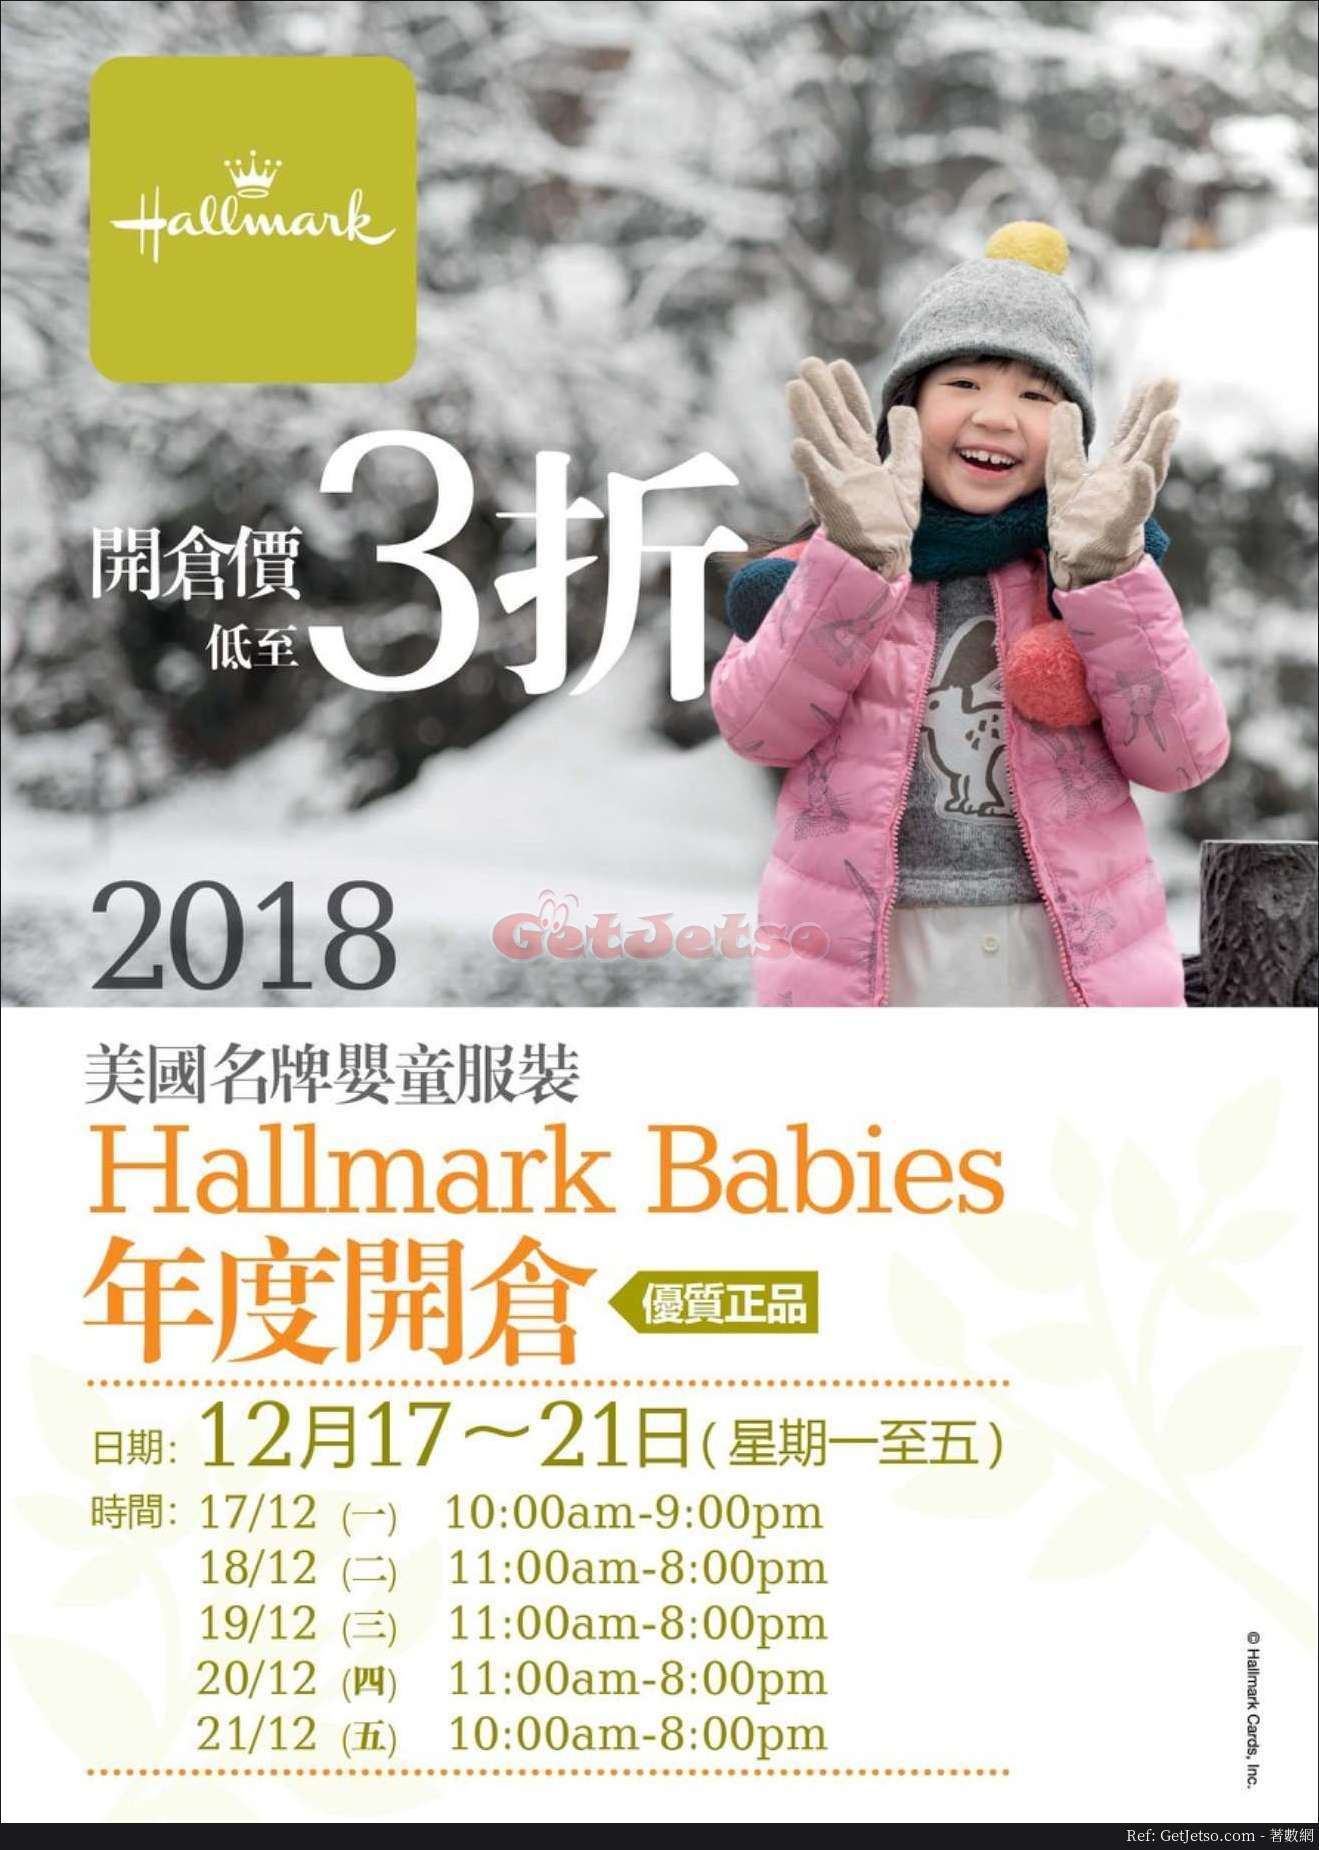 Hallmark Babies 低至3折年度開倉優惠(至18年12月21日)圖片1